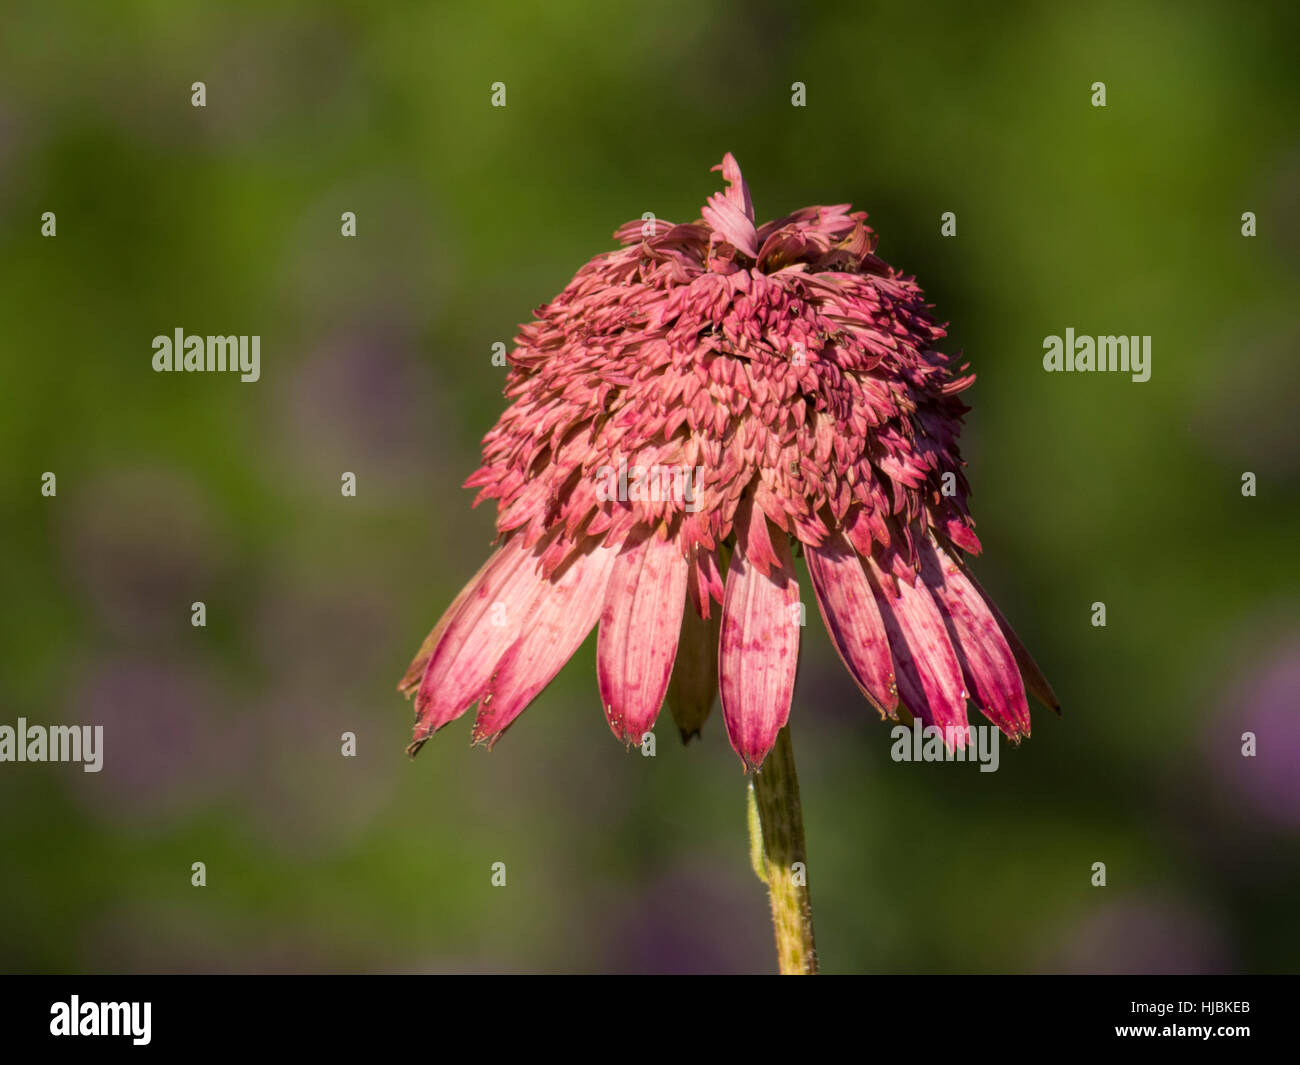 Equinacea flower in bloom Stock Photo